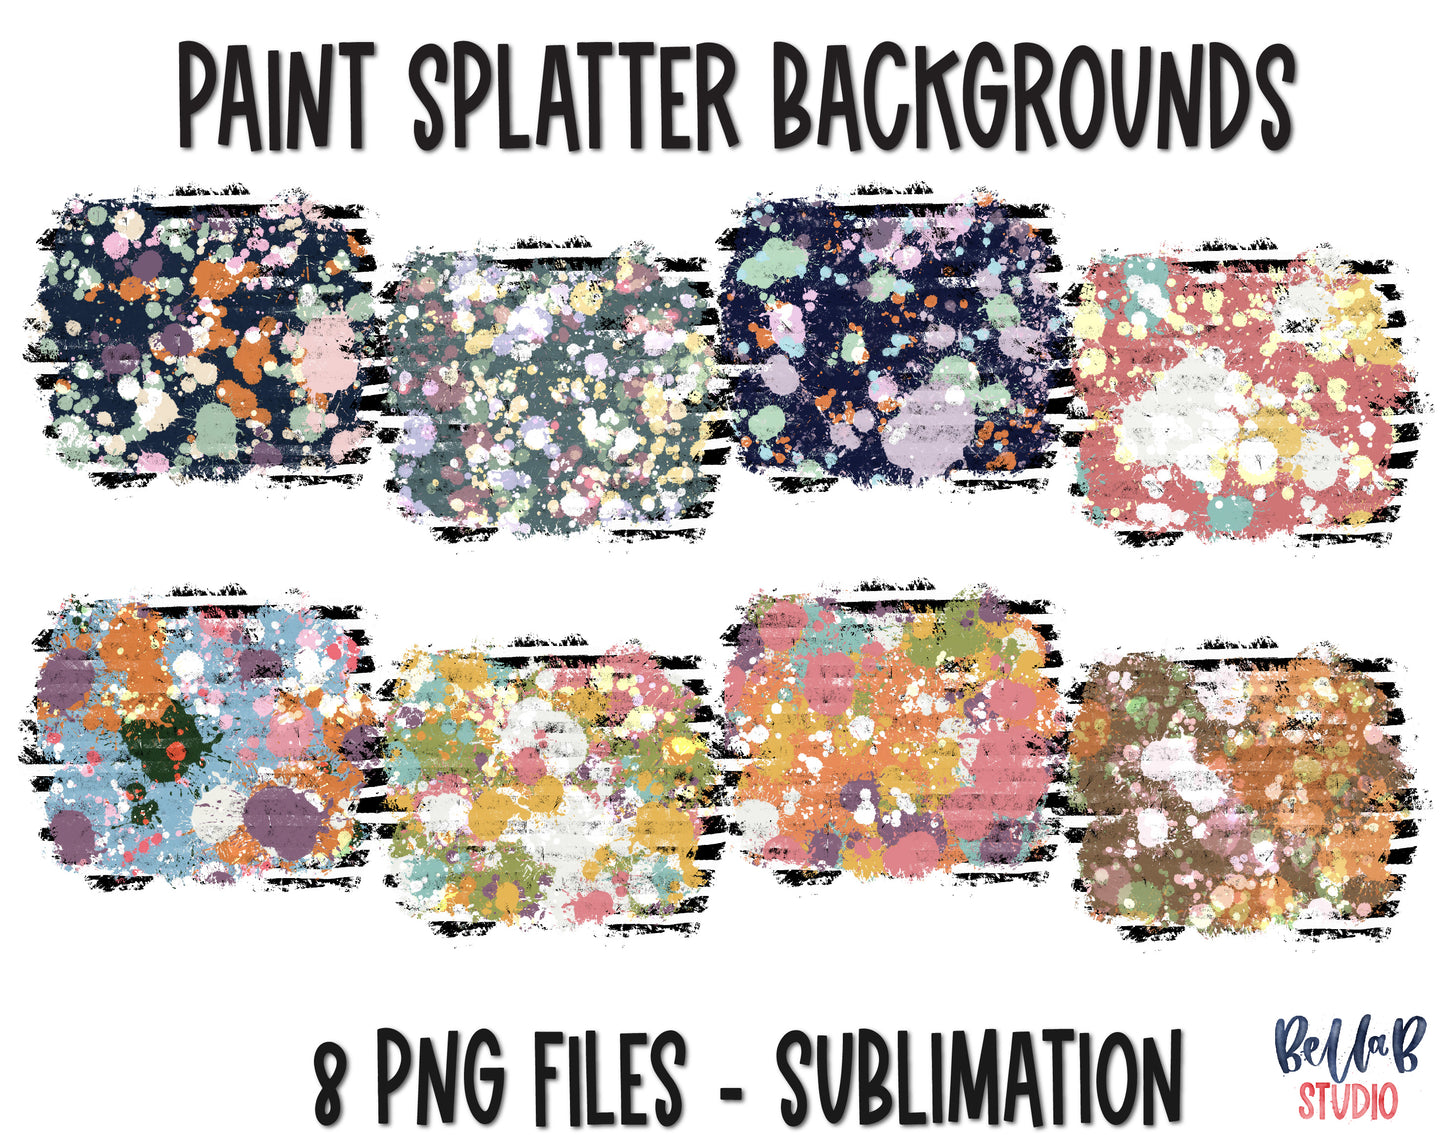 Paint Splatter and Striped Background Sublimation Bundle